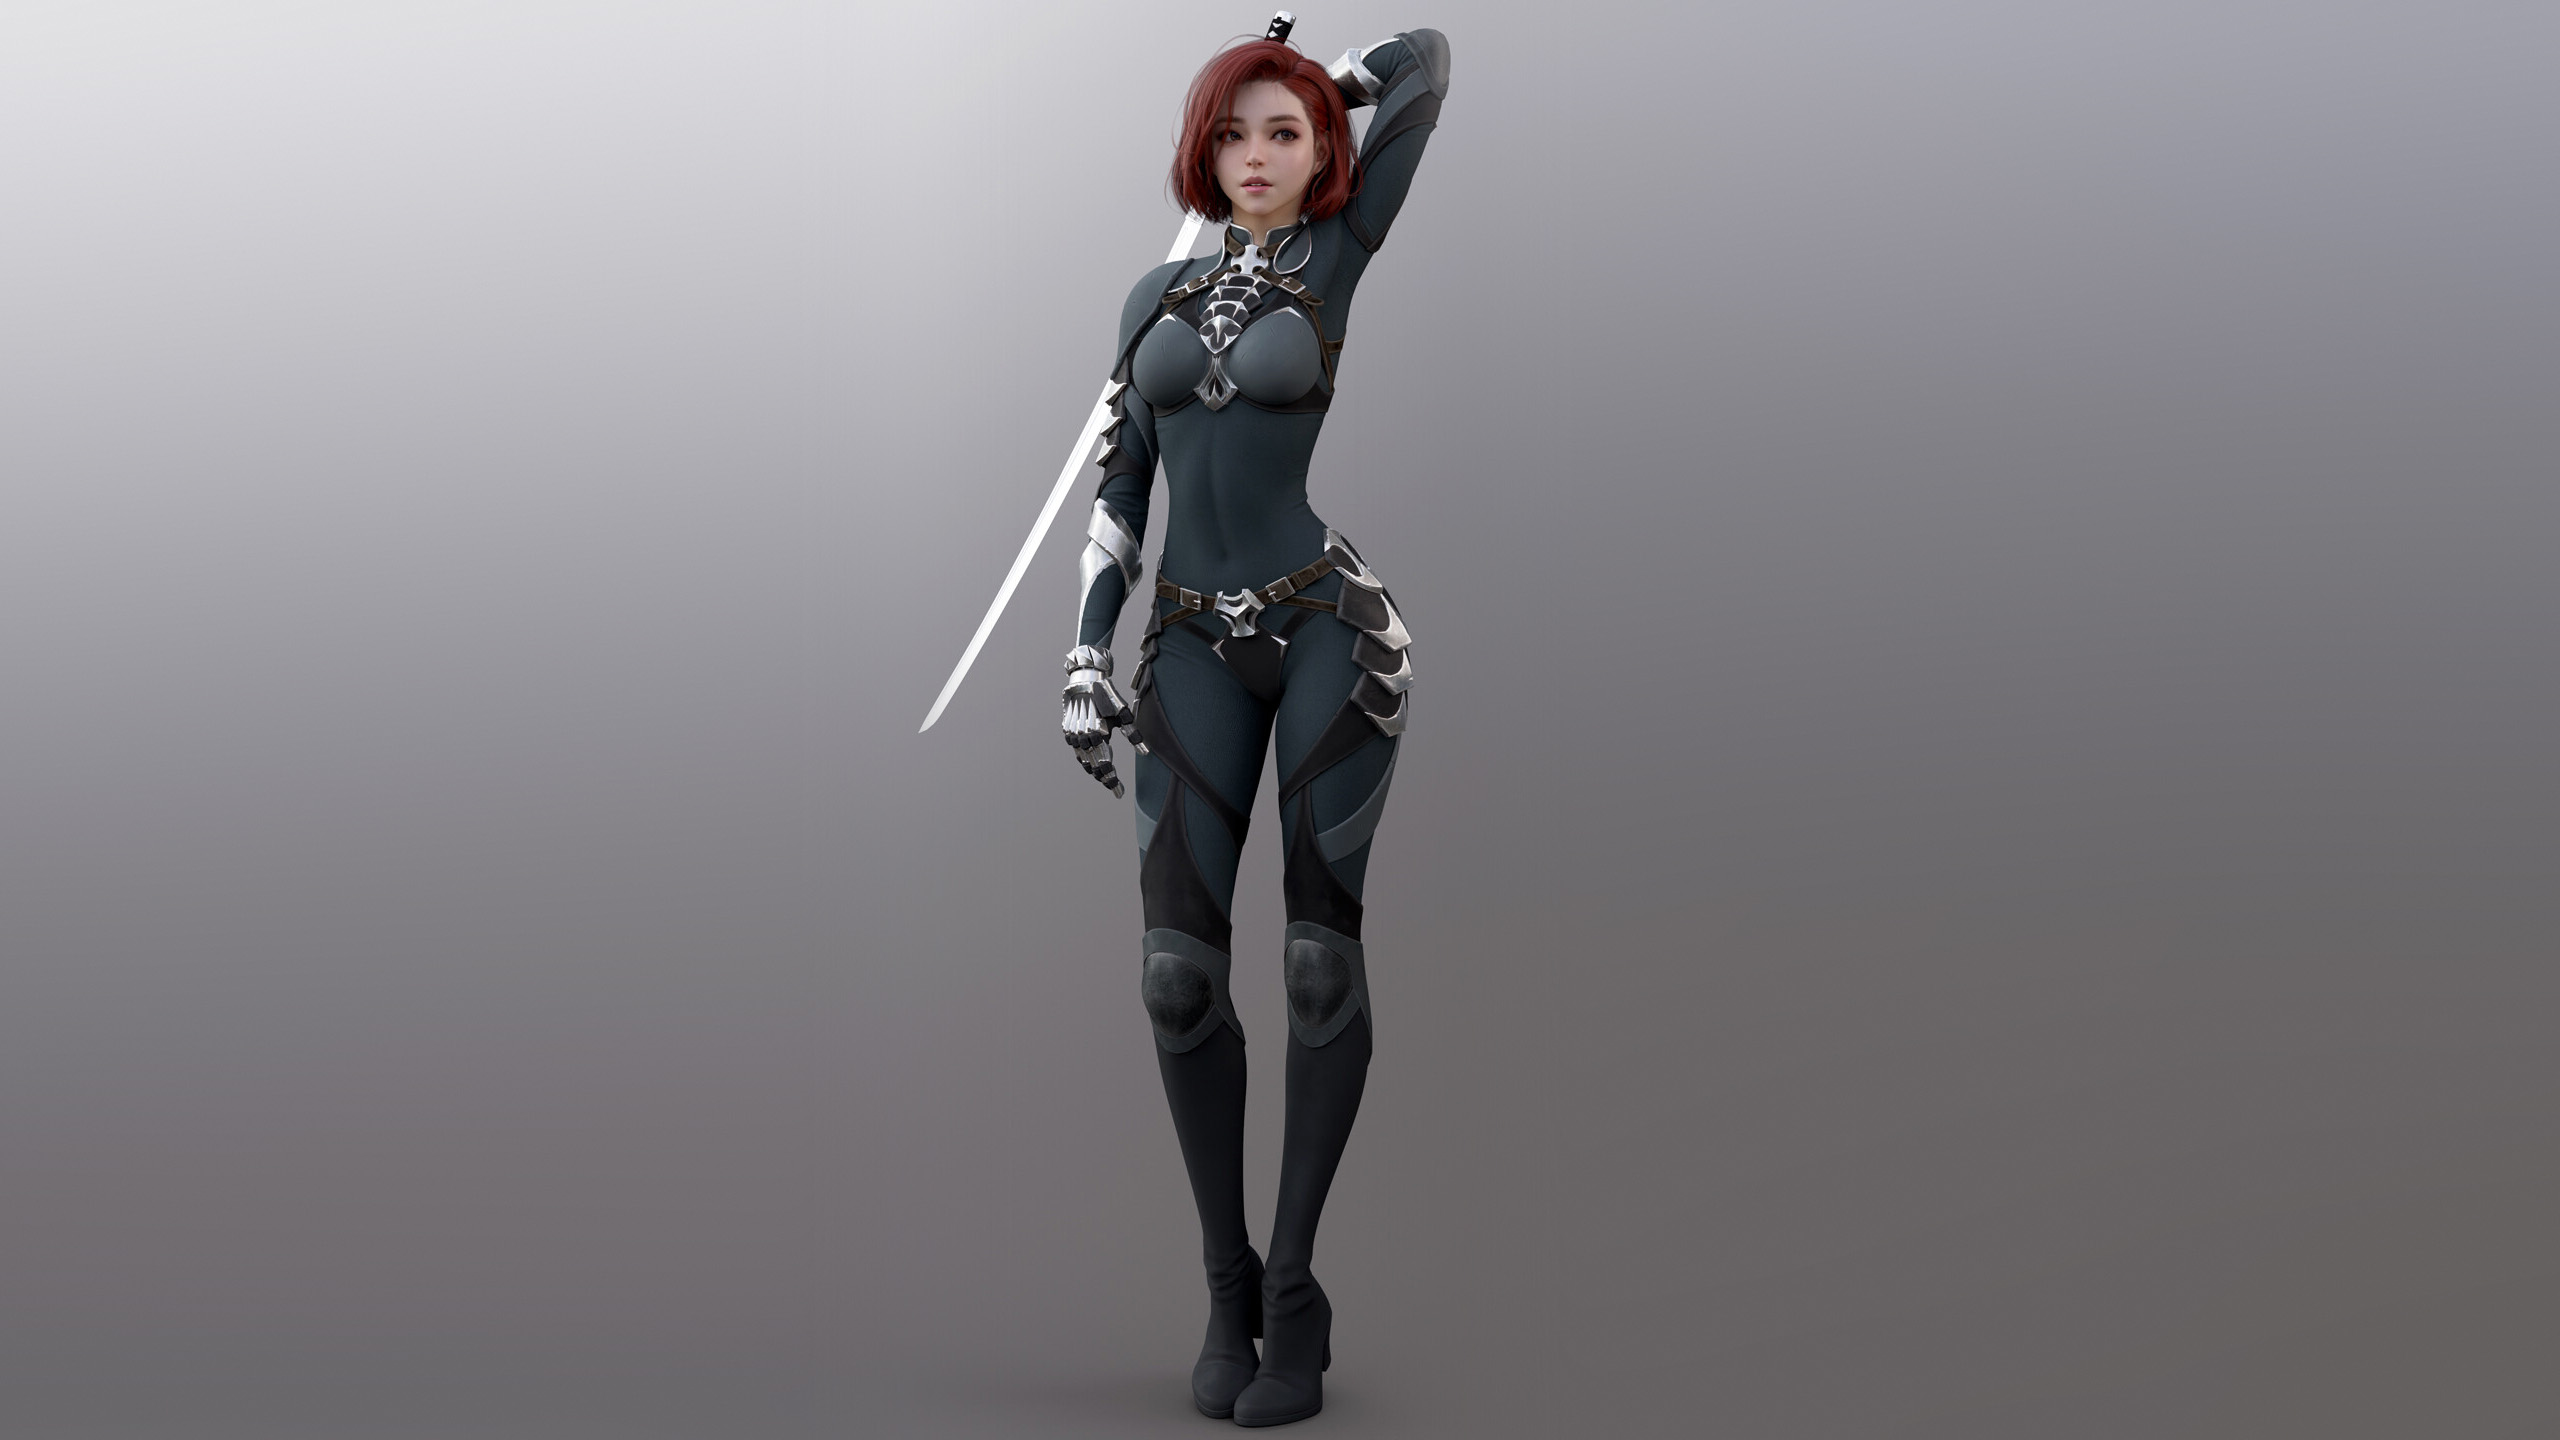 General 2560x1440 ArtStation readhead katana armor armored Shin JeongHo bodysuit render